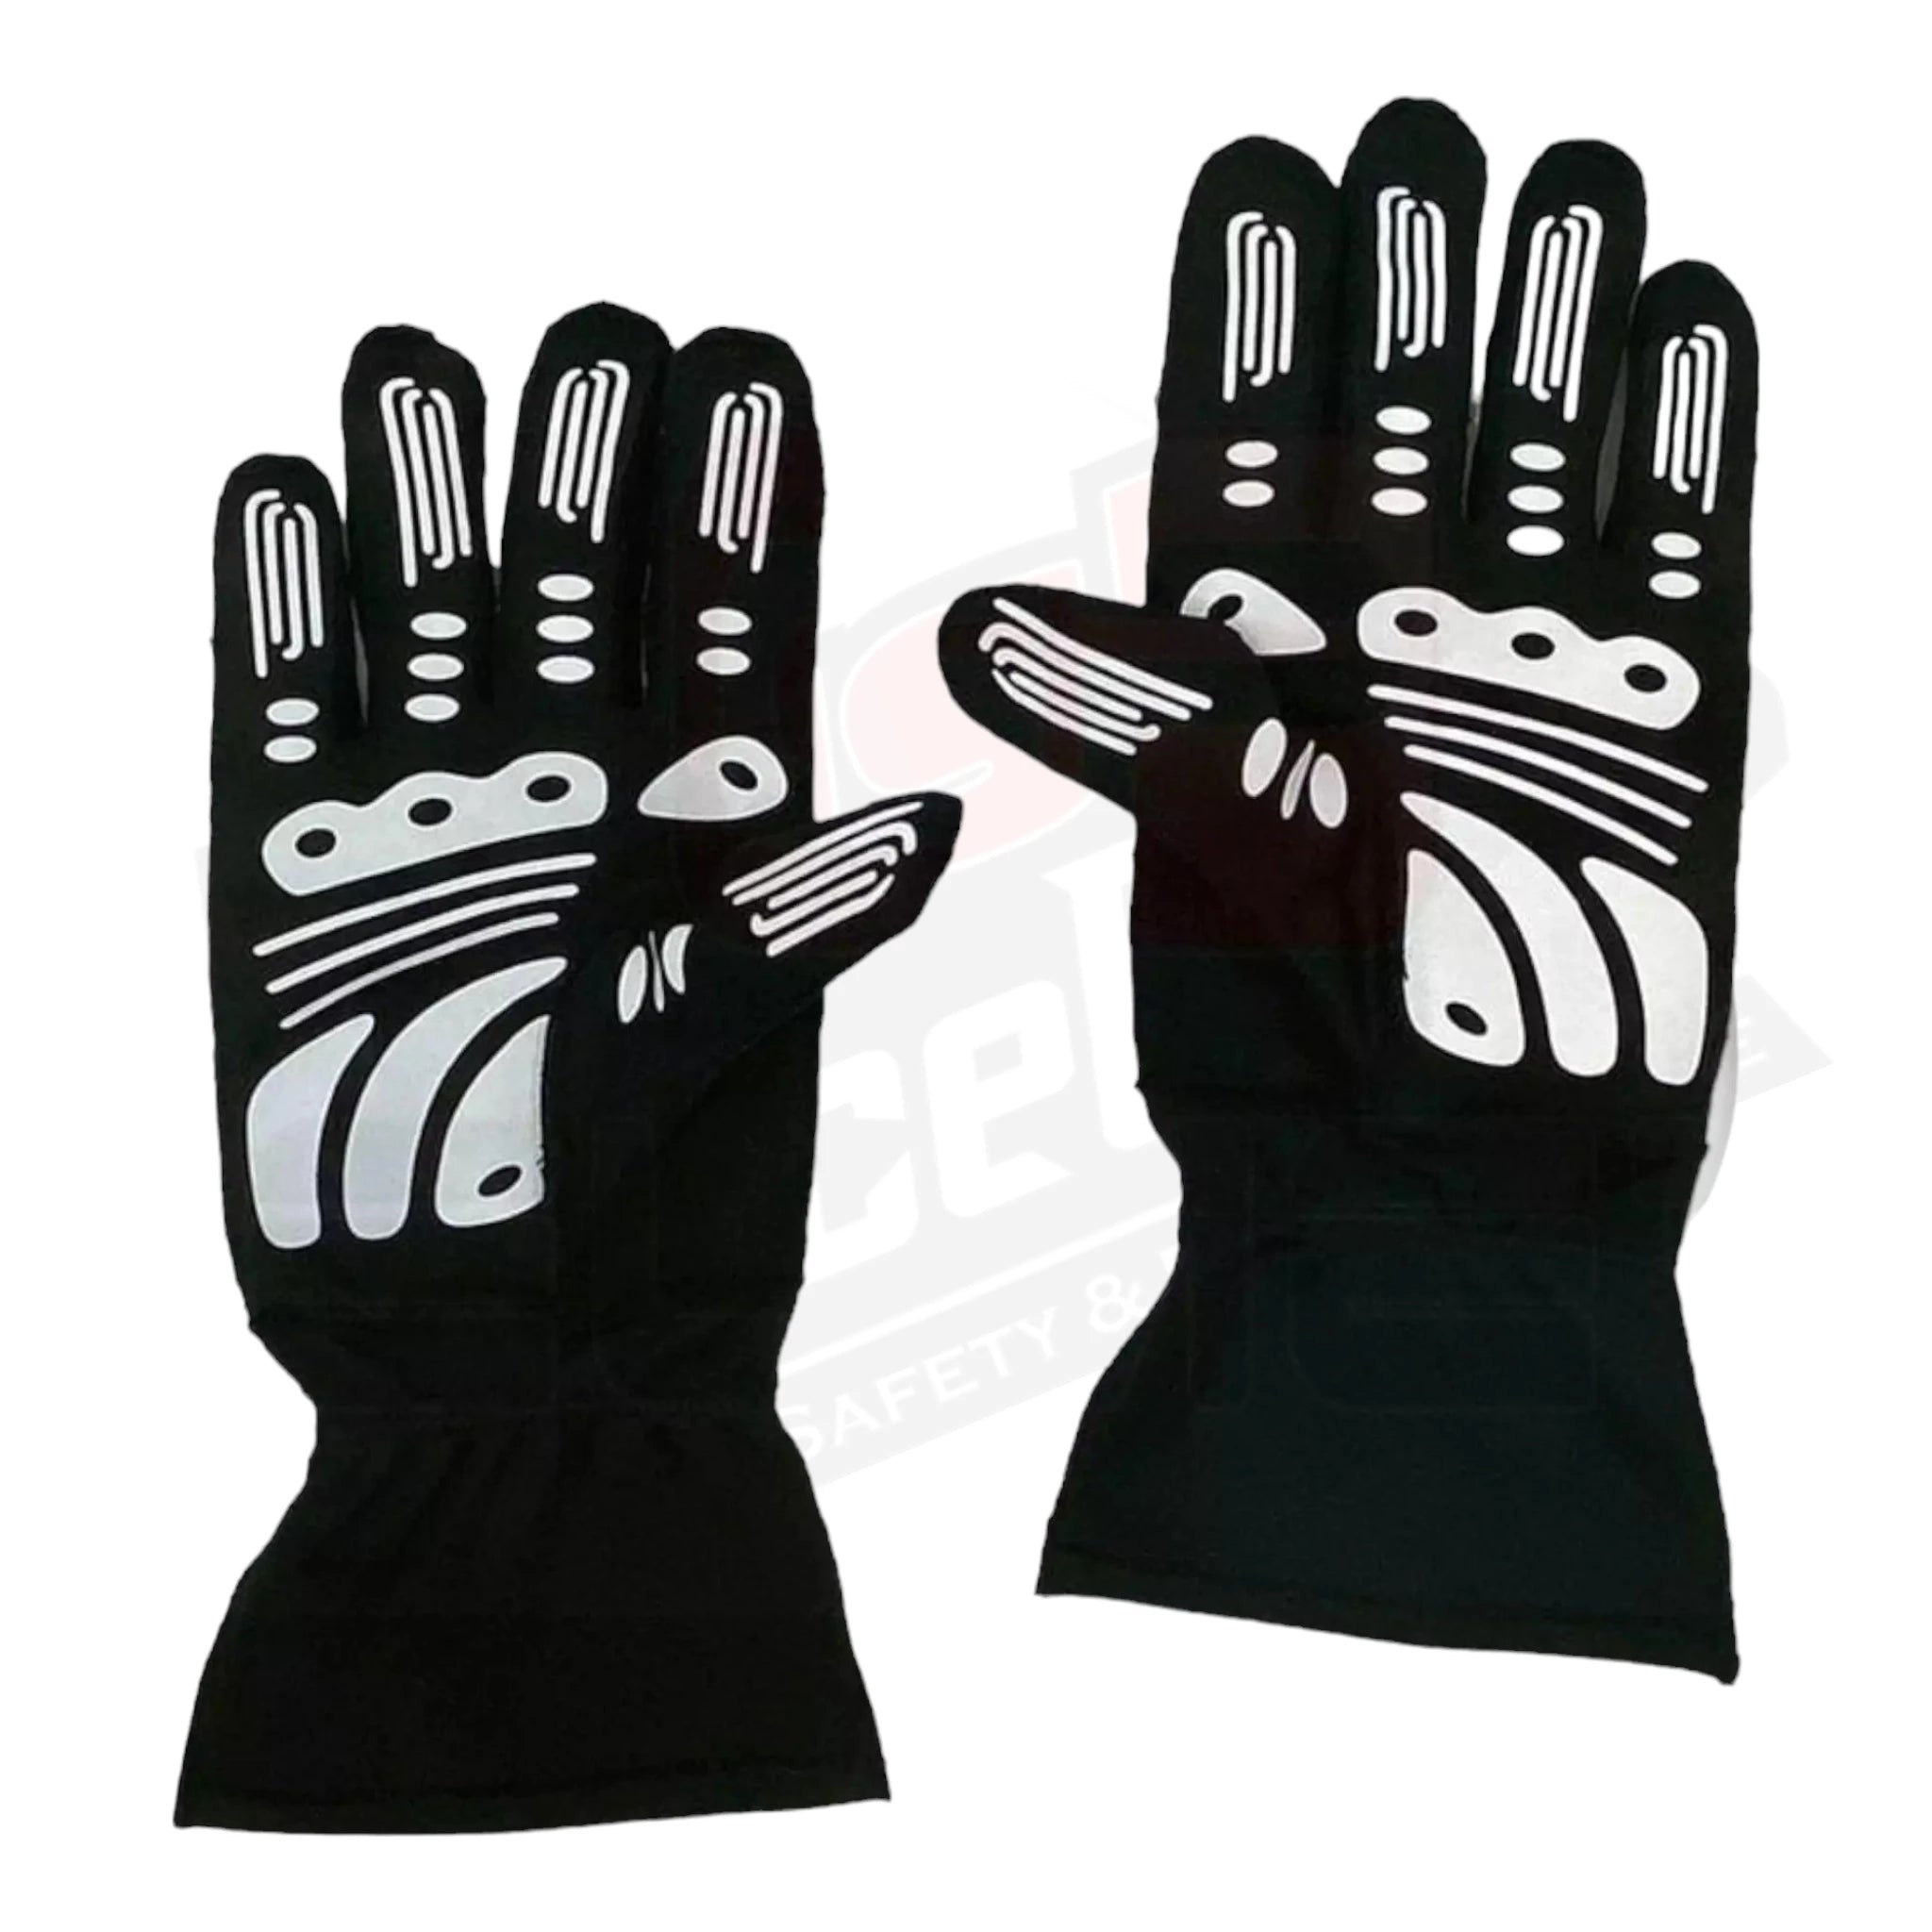 2020 Lewis Hamilton F1 Racing Gloves